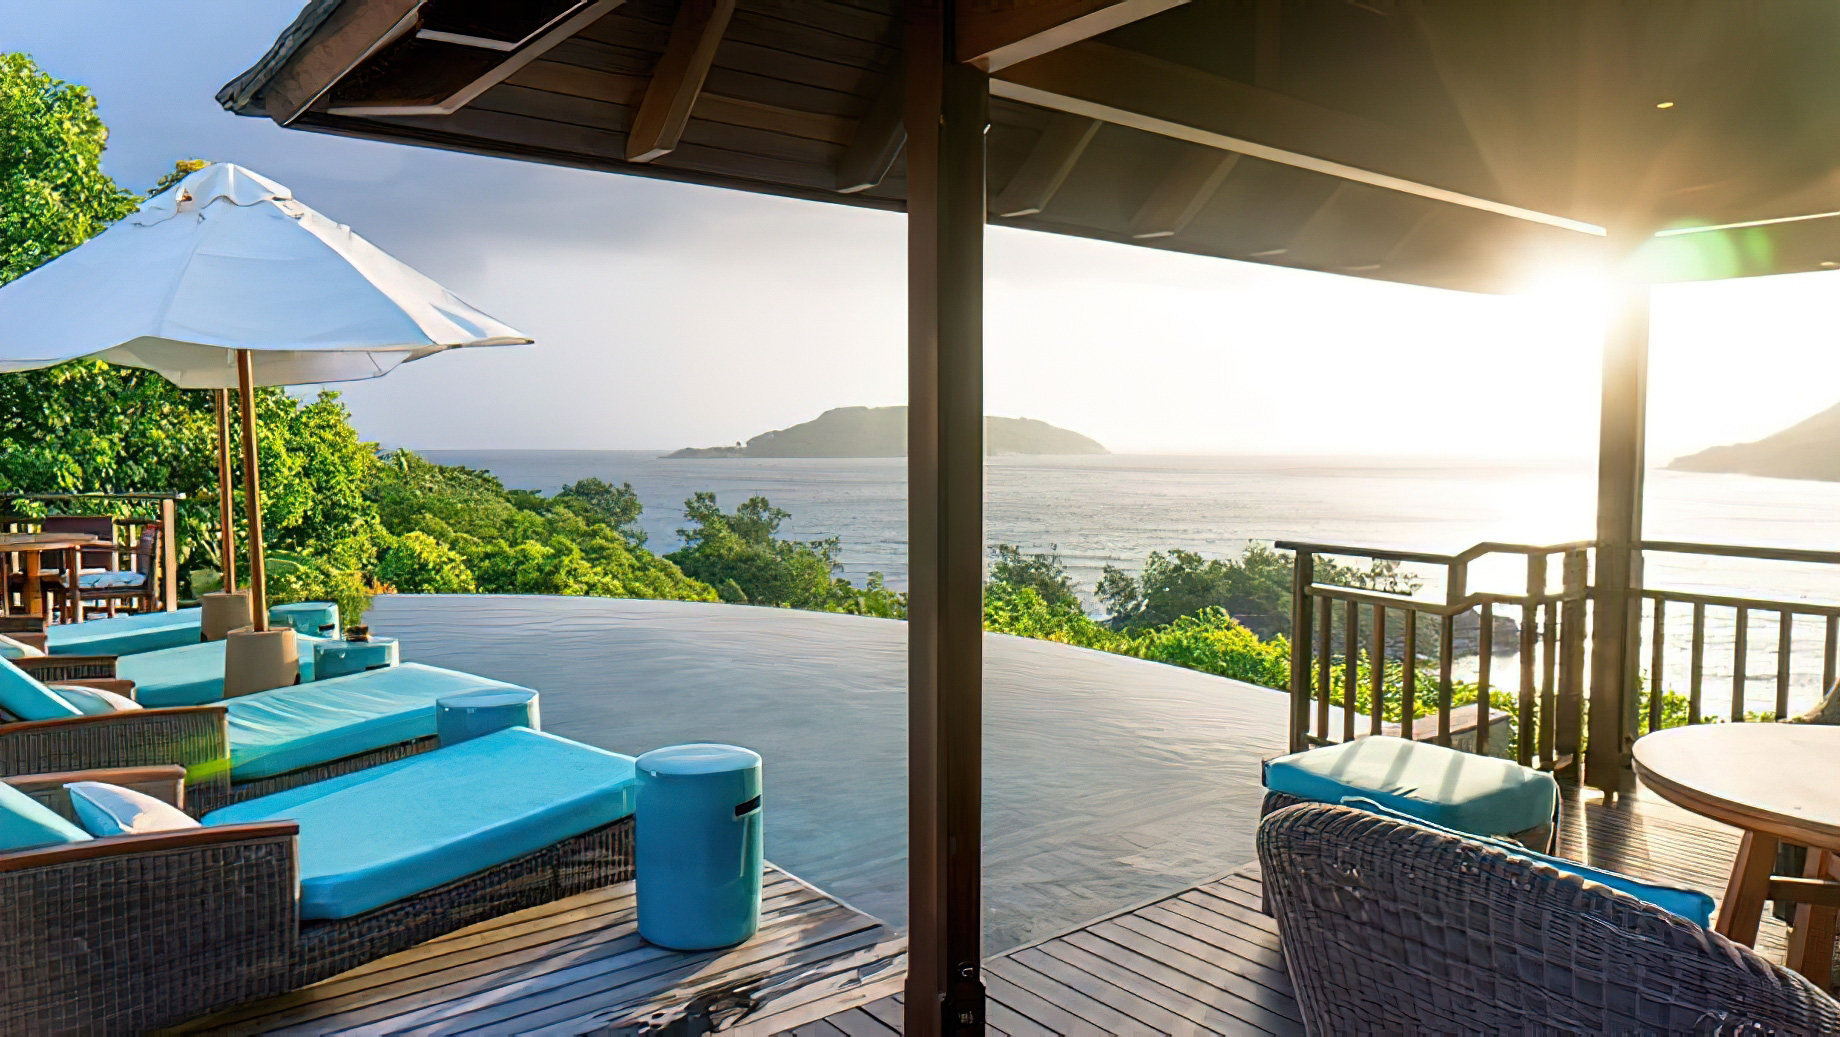 Constance Ephelia Resort - Port Launay, Mahe, Seychelles - Presidential Villa Pool Deck Ocean View